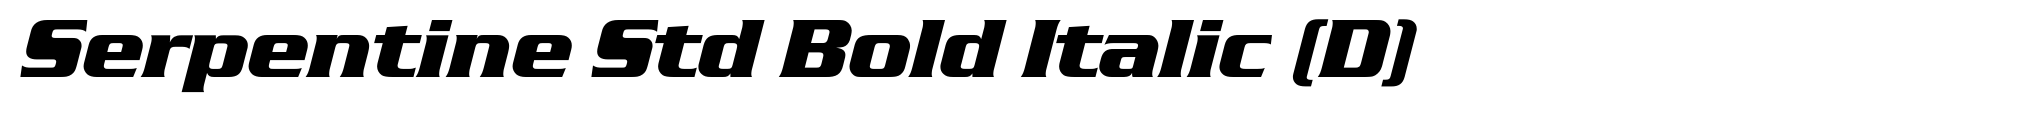 Serpentine Std Bold Italic (D) image